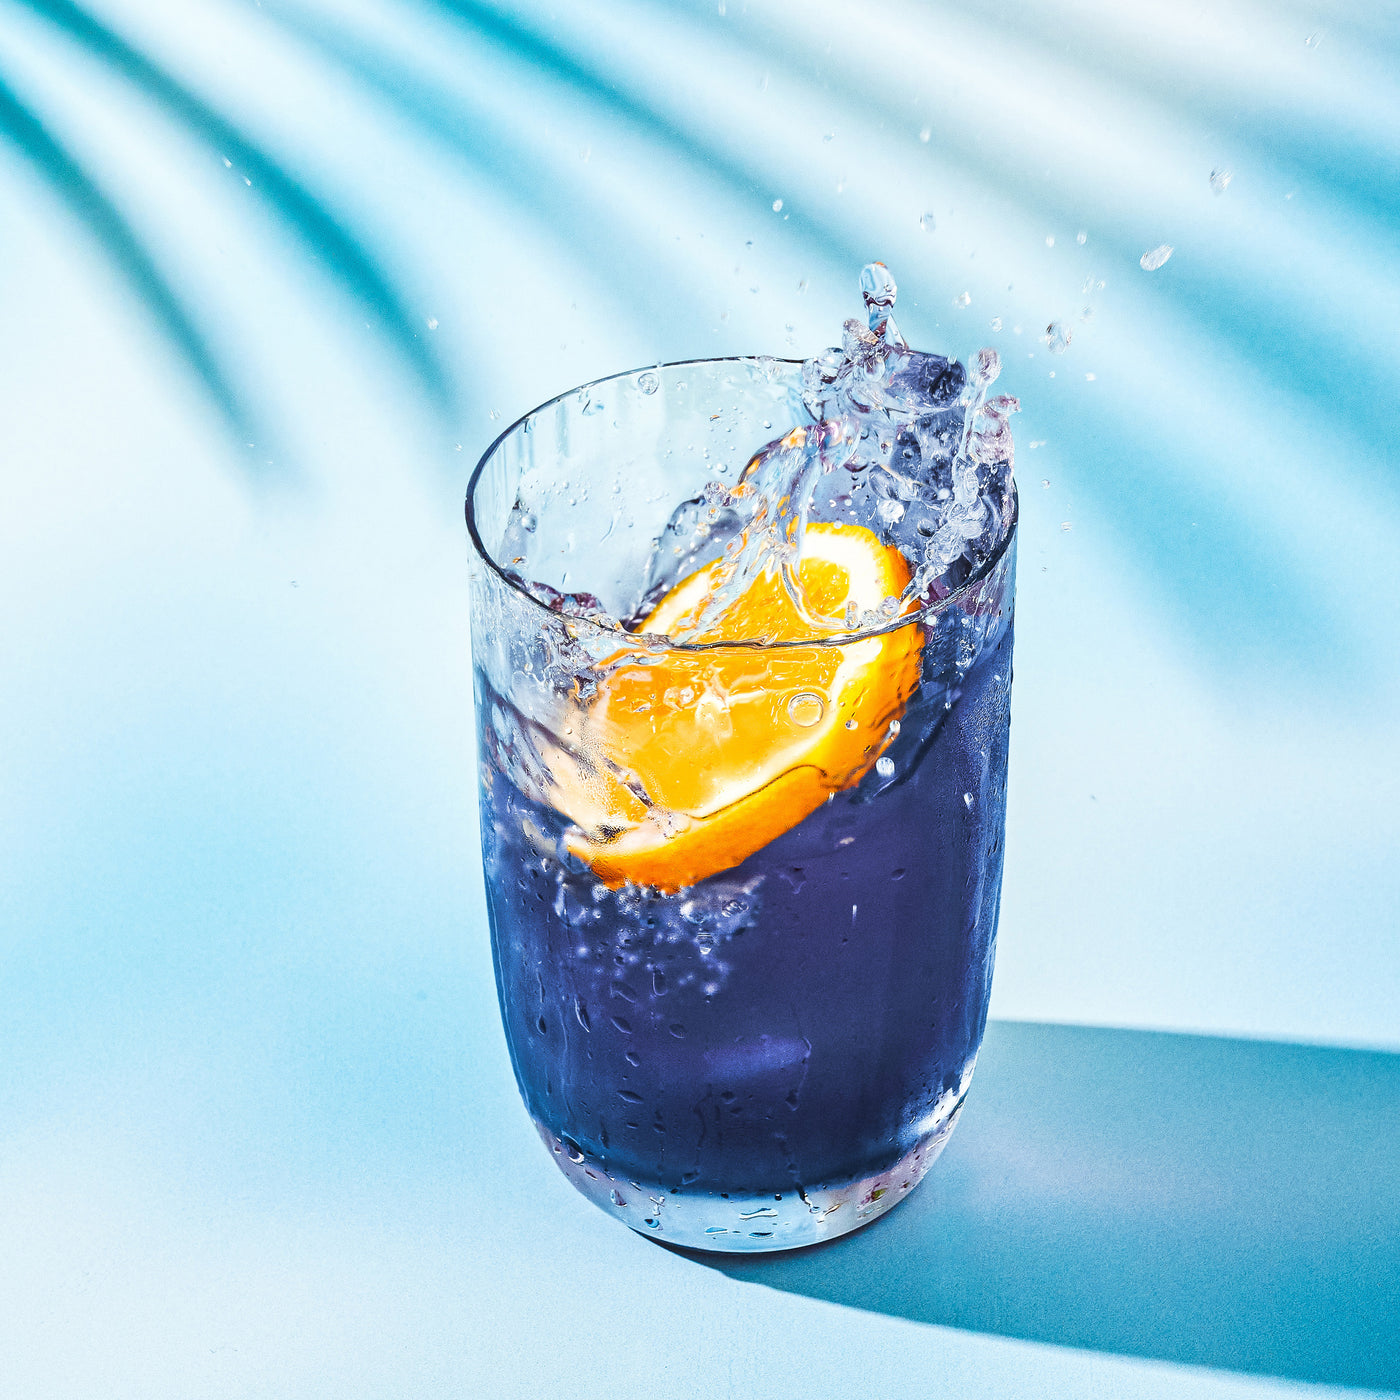 Glass of blue colored Blackberry Jasmine Iced Tea with an orange slice splashing into the glass.